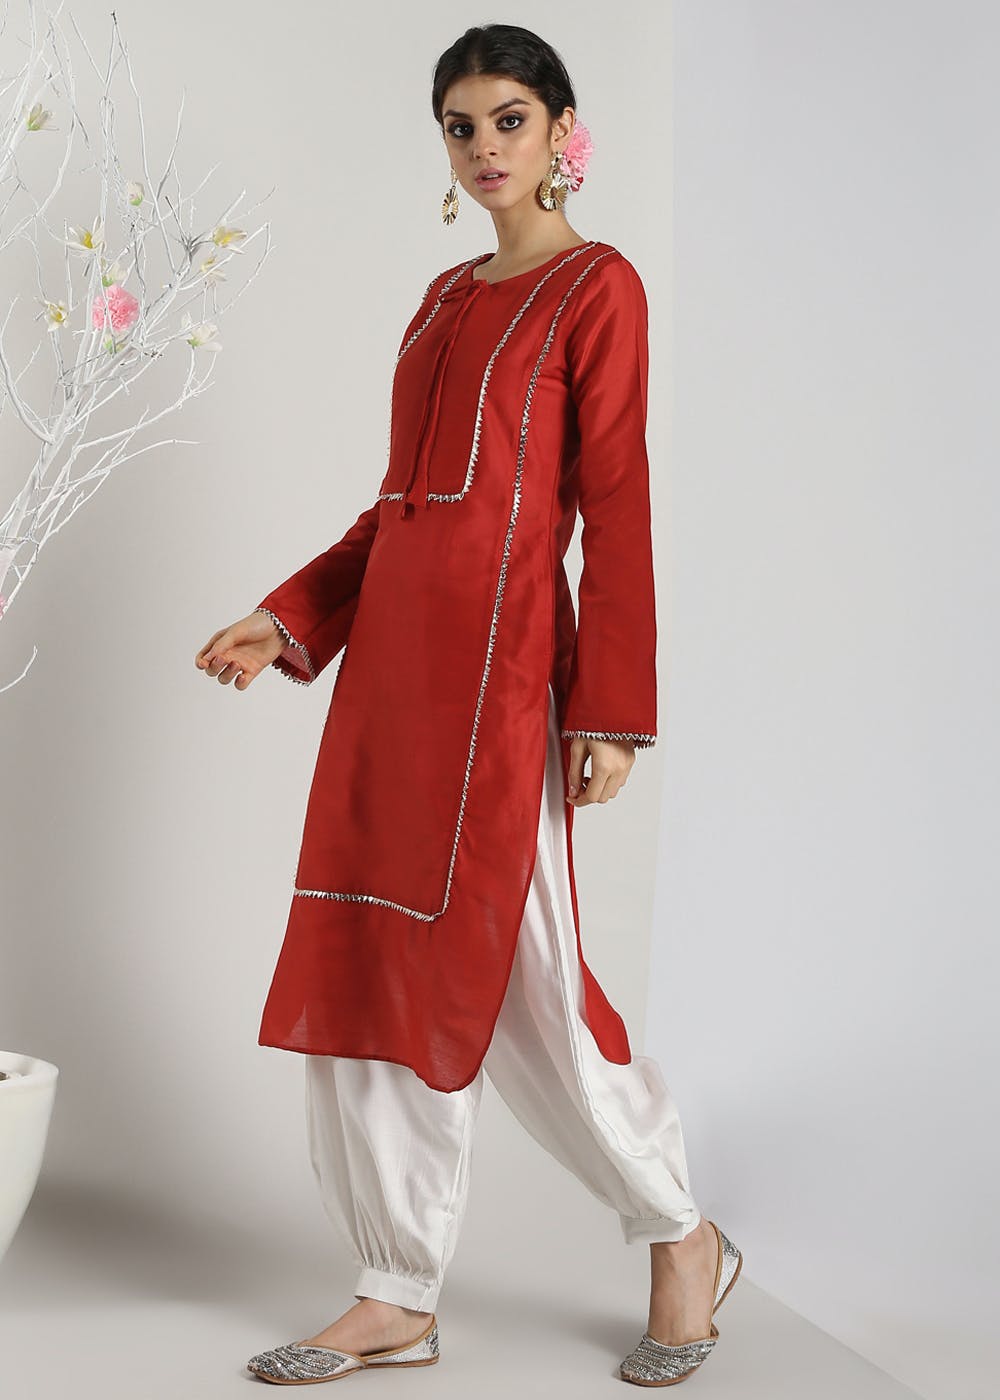 Wholesale Gota patti suit get it from wholesalers of Gota patti suit